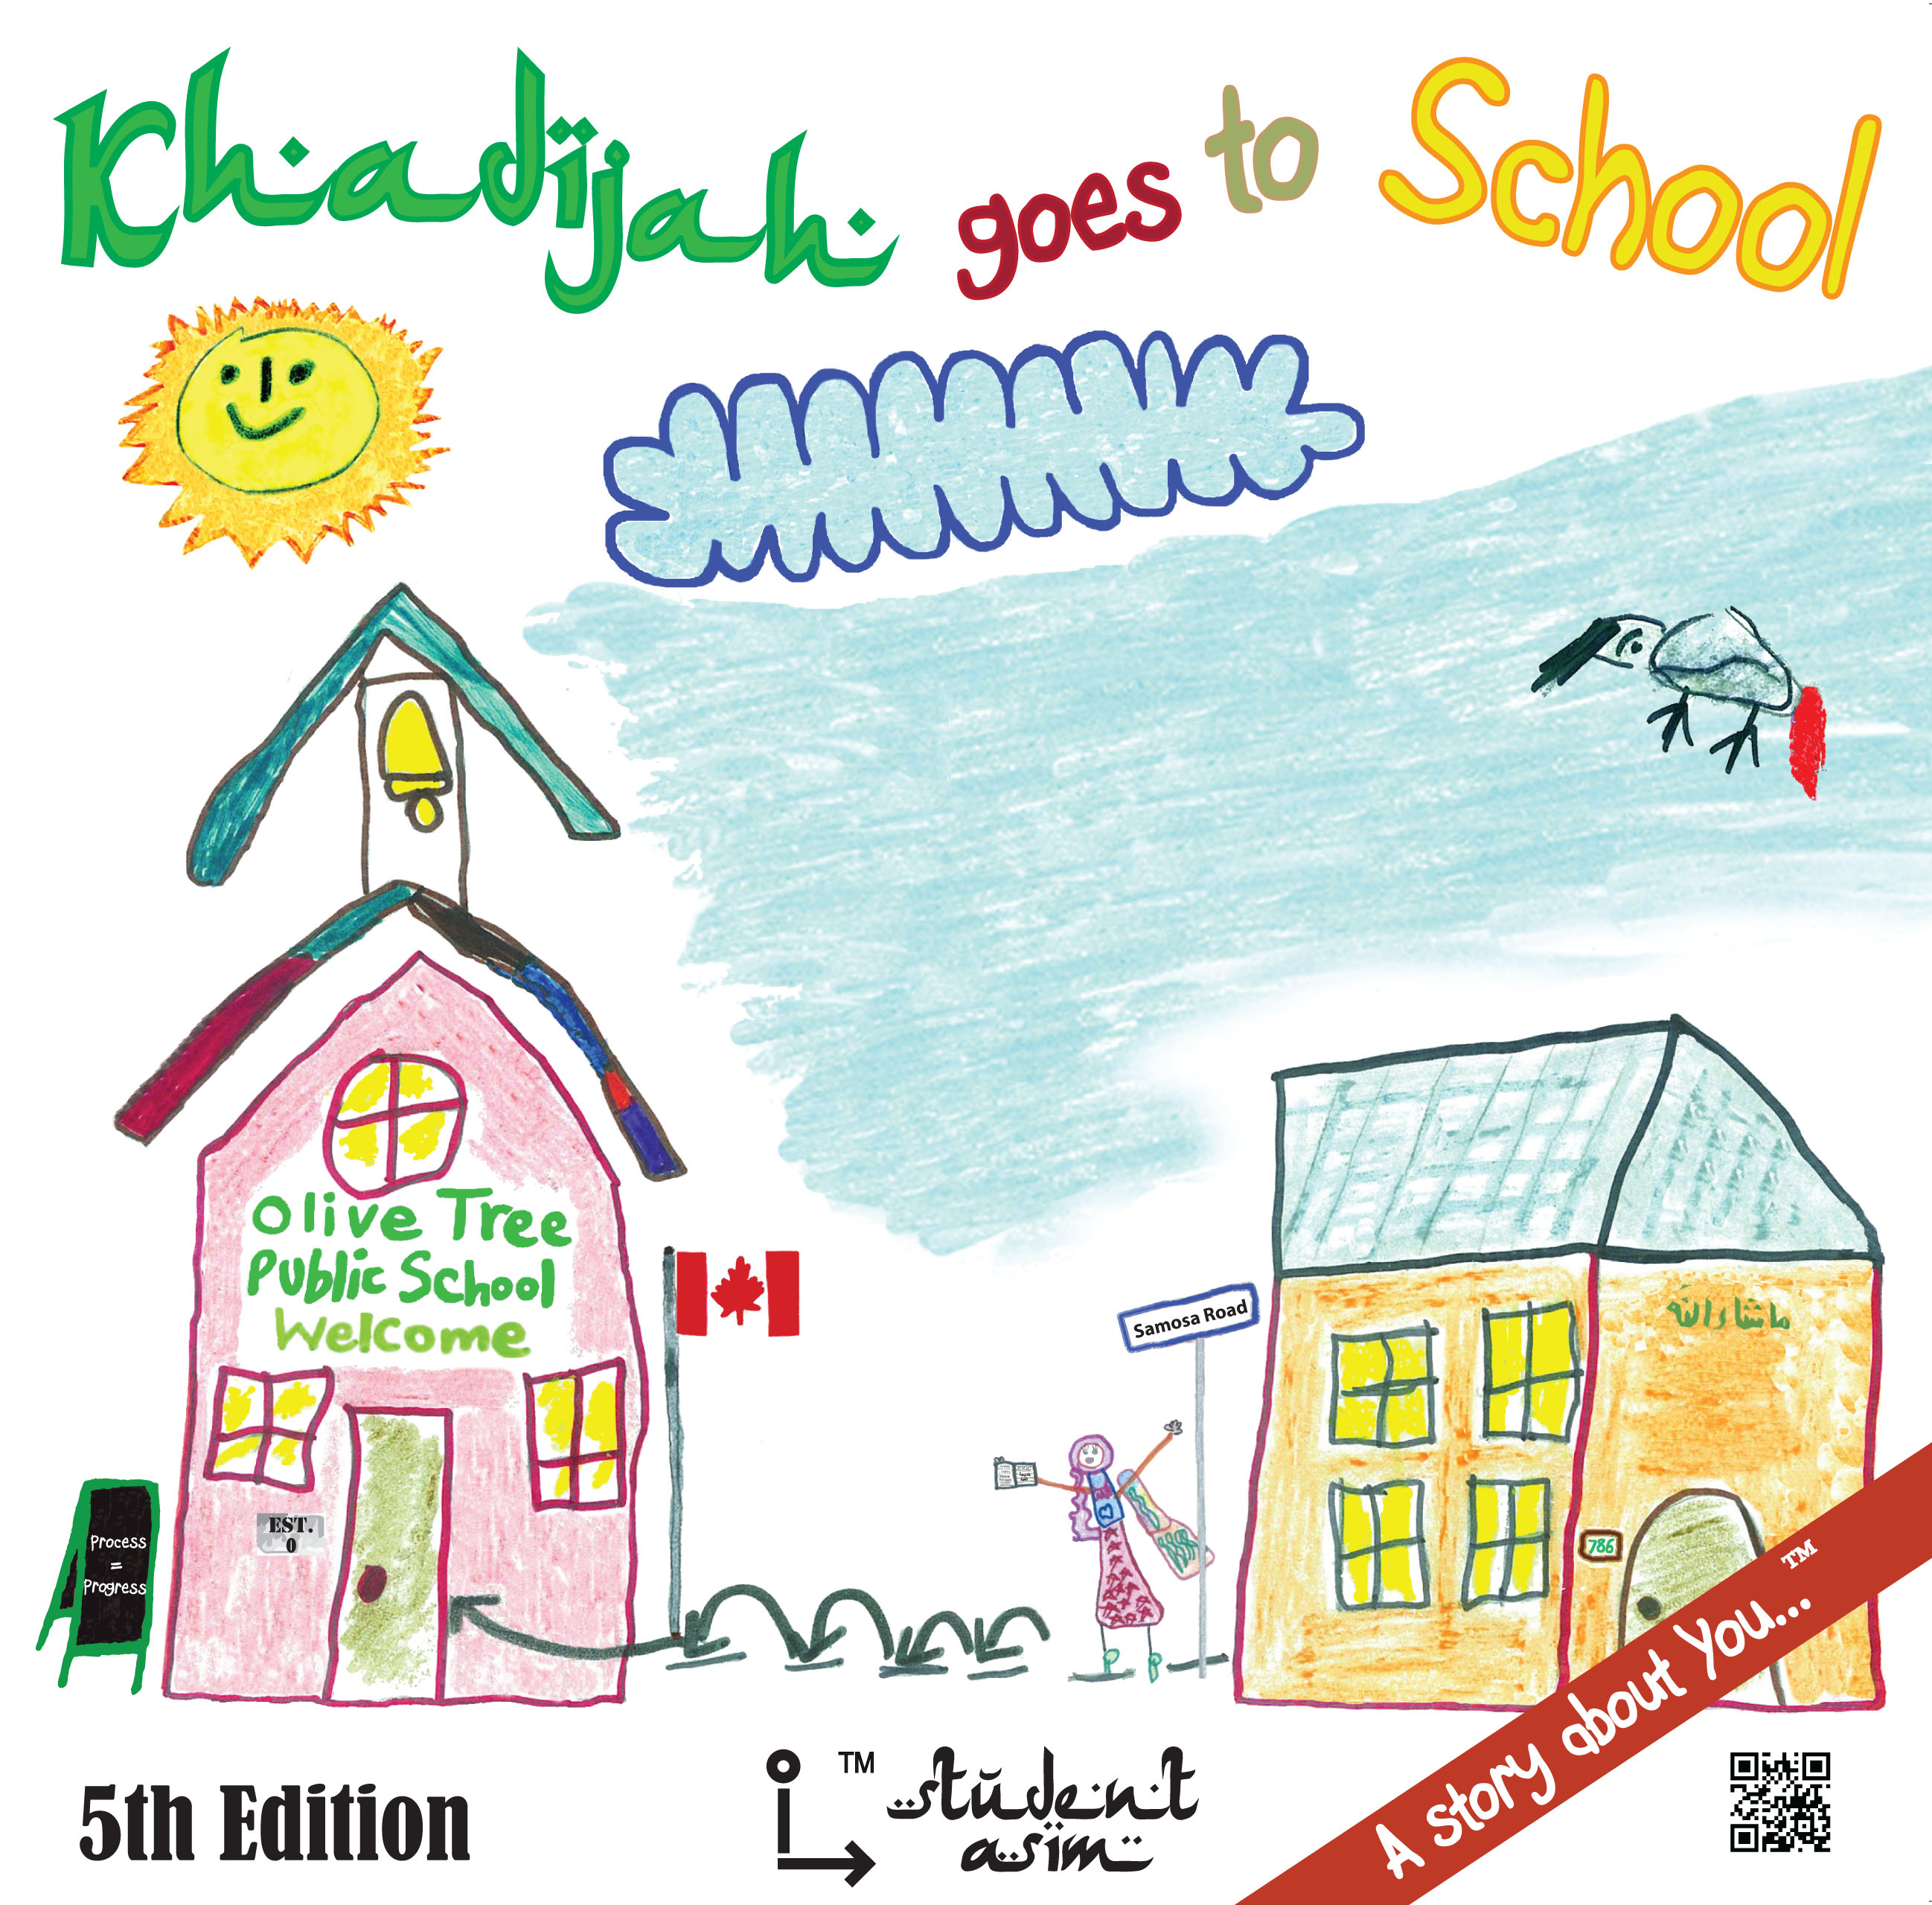 Khadijah goes to School book cover